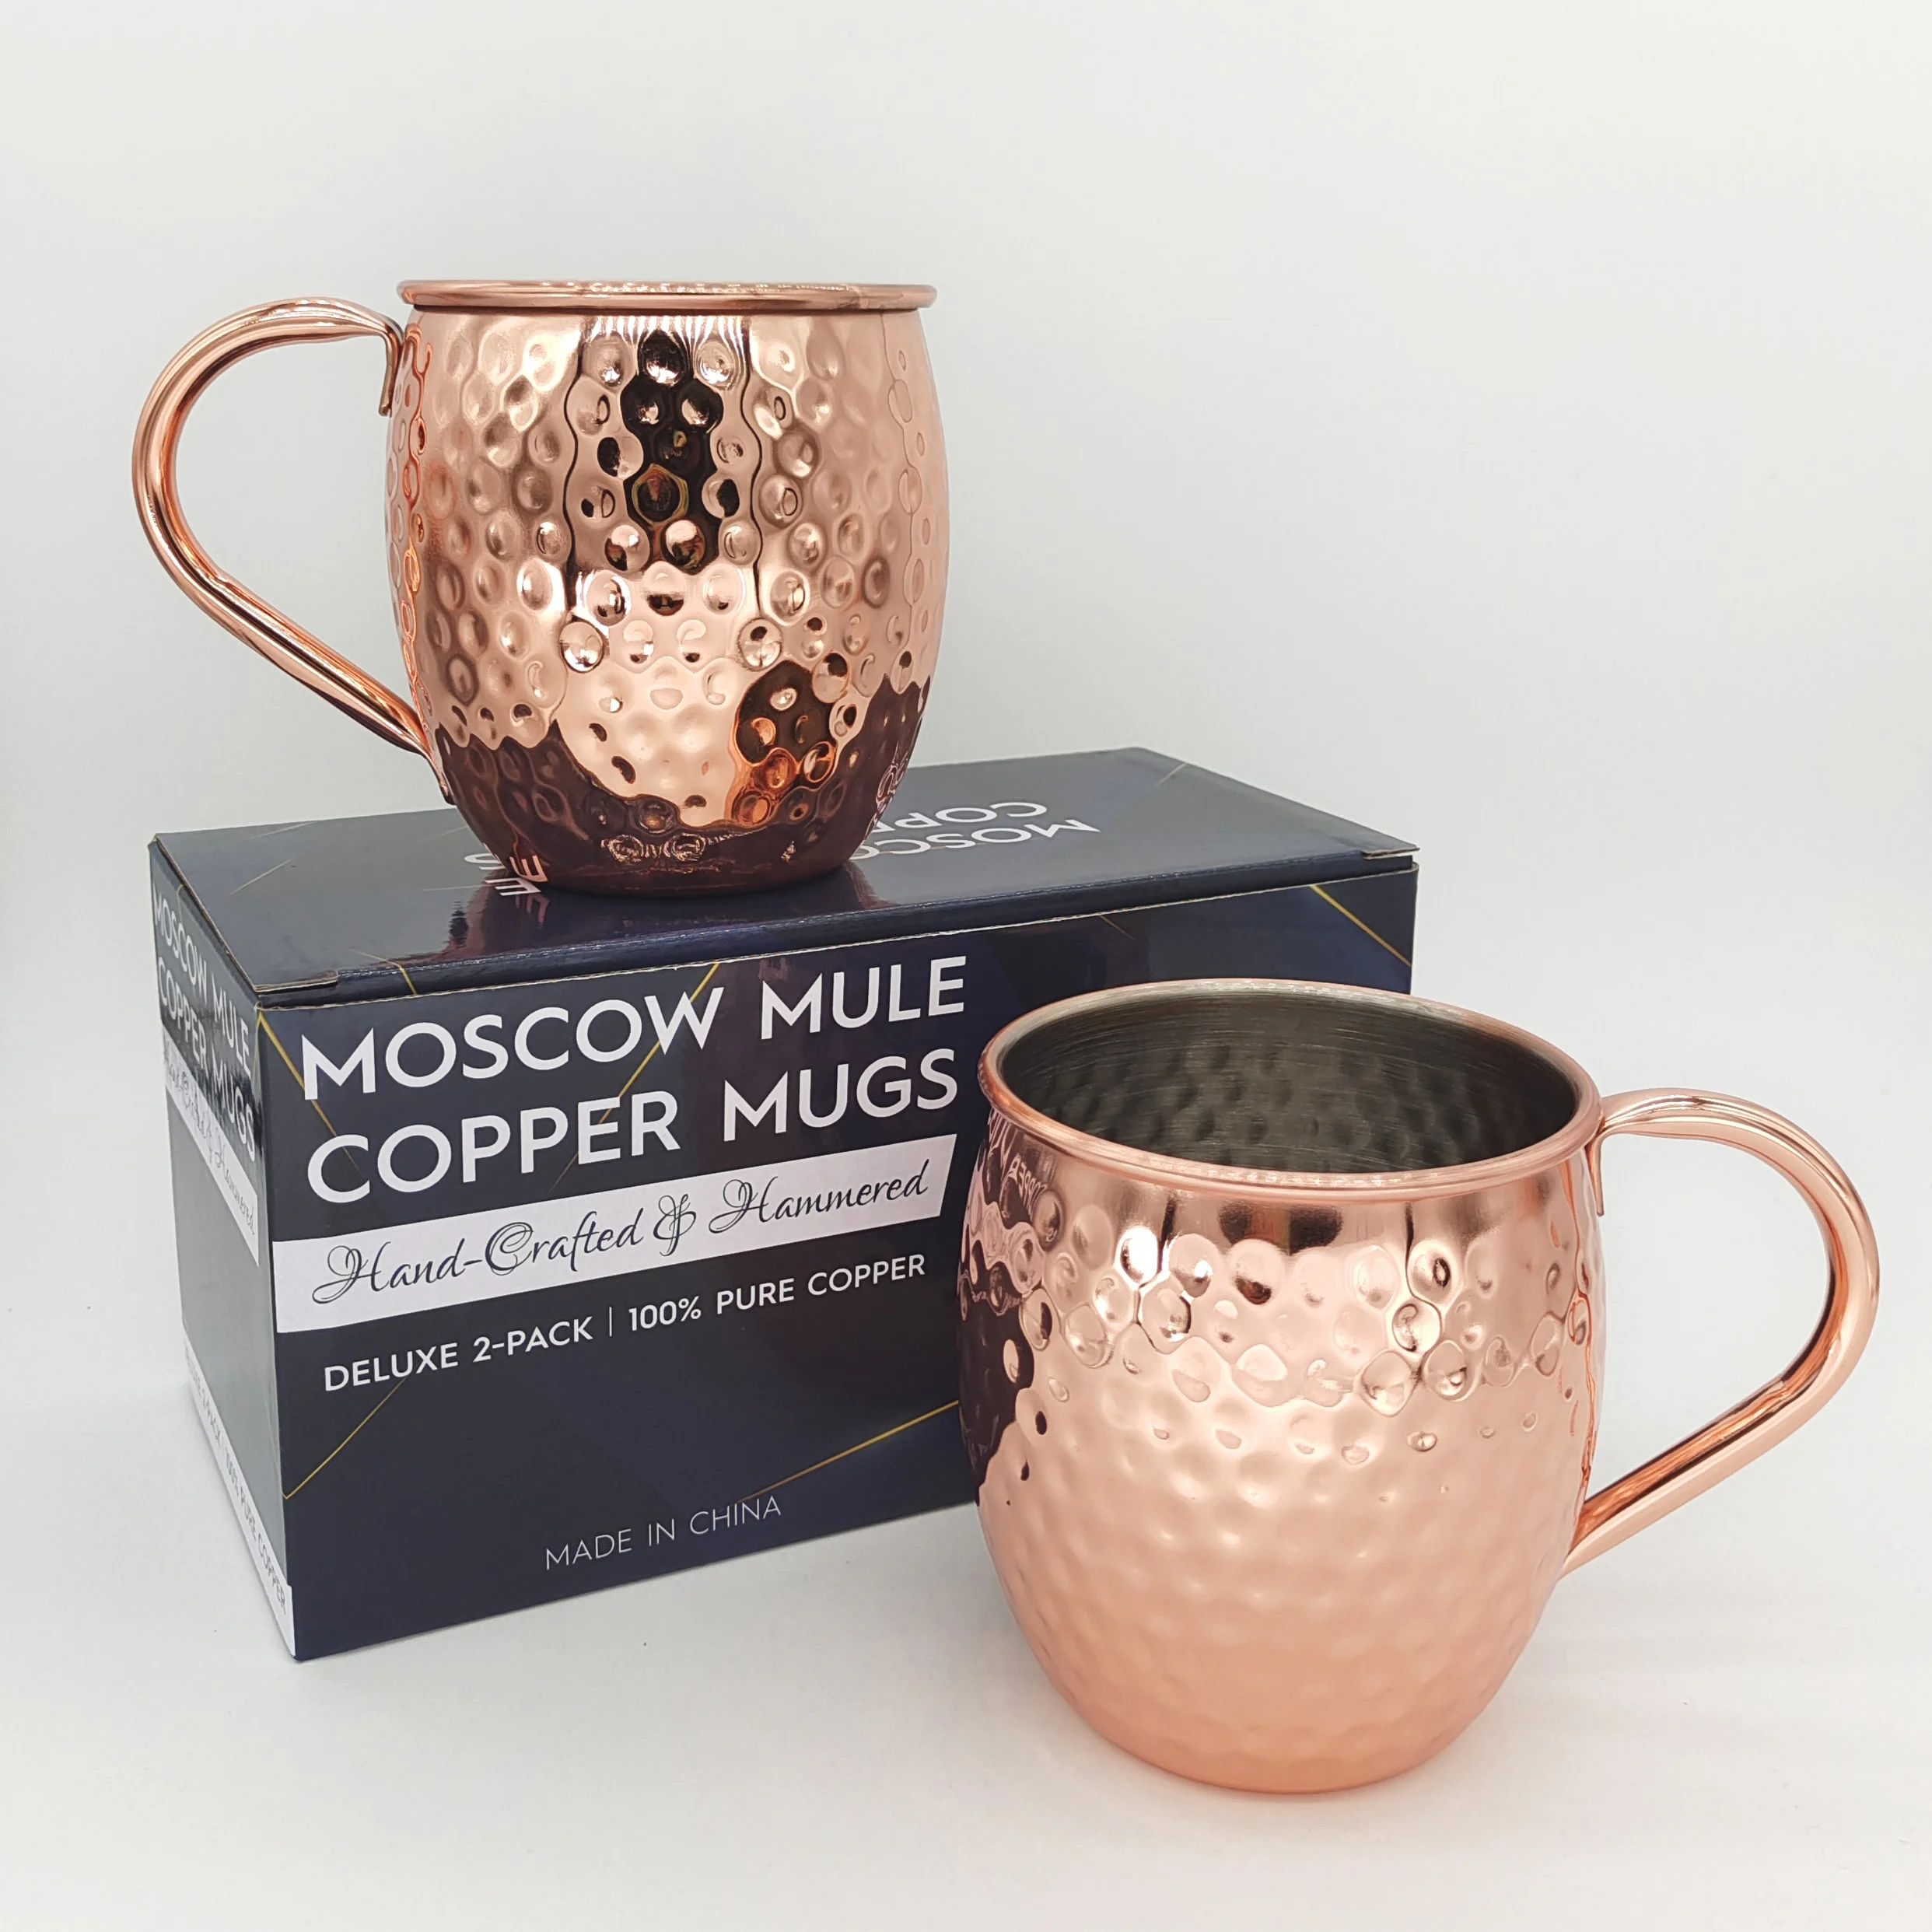 Vintage Barrel Hammered: 16oz Round Handle Moscow Mule Mug by Copper Mug Co.